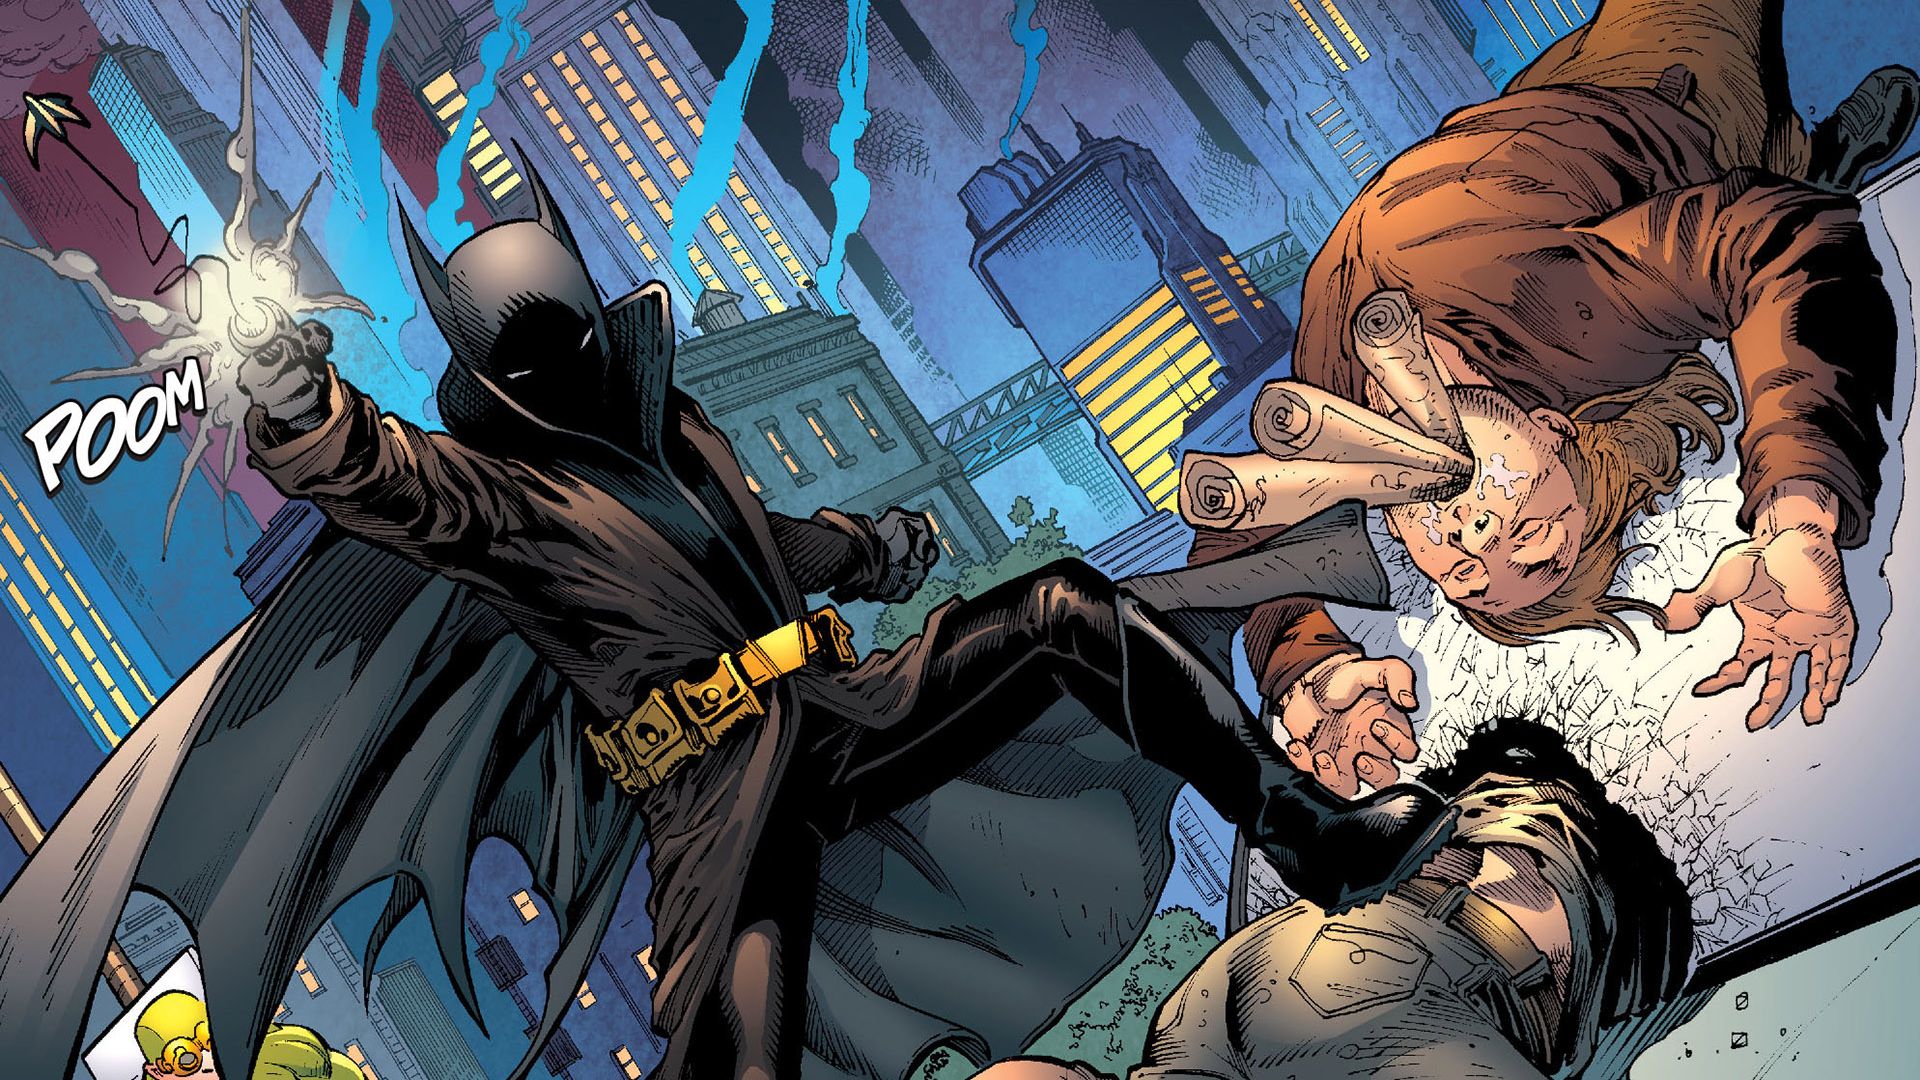 Скачать обои бесплатно Комиксы, Бэтмен, Бэтмен И Робин картинка на рабочий стол ПК